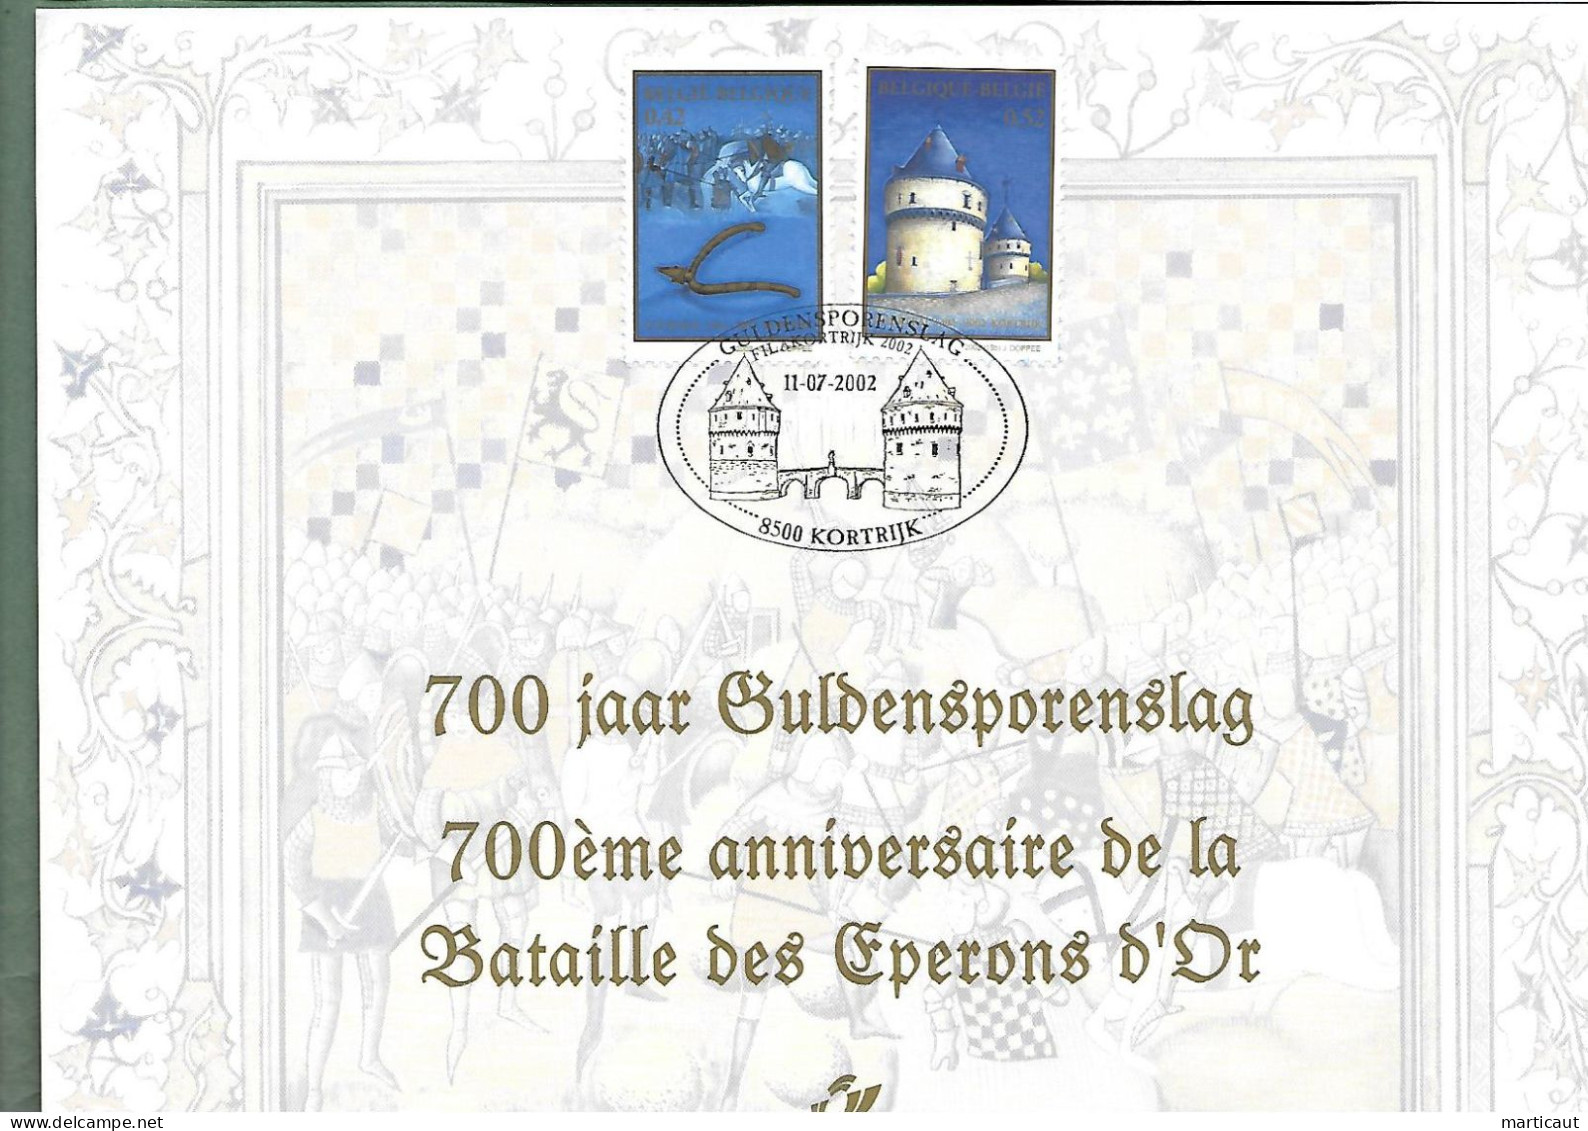 HK 3088 -  Belgique Guldensporenslag - Année 2002 - Cartoline Commemorative - Emissioni Congiunte [HK]